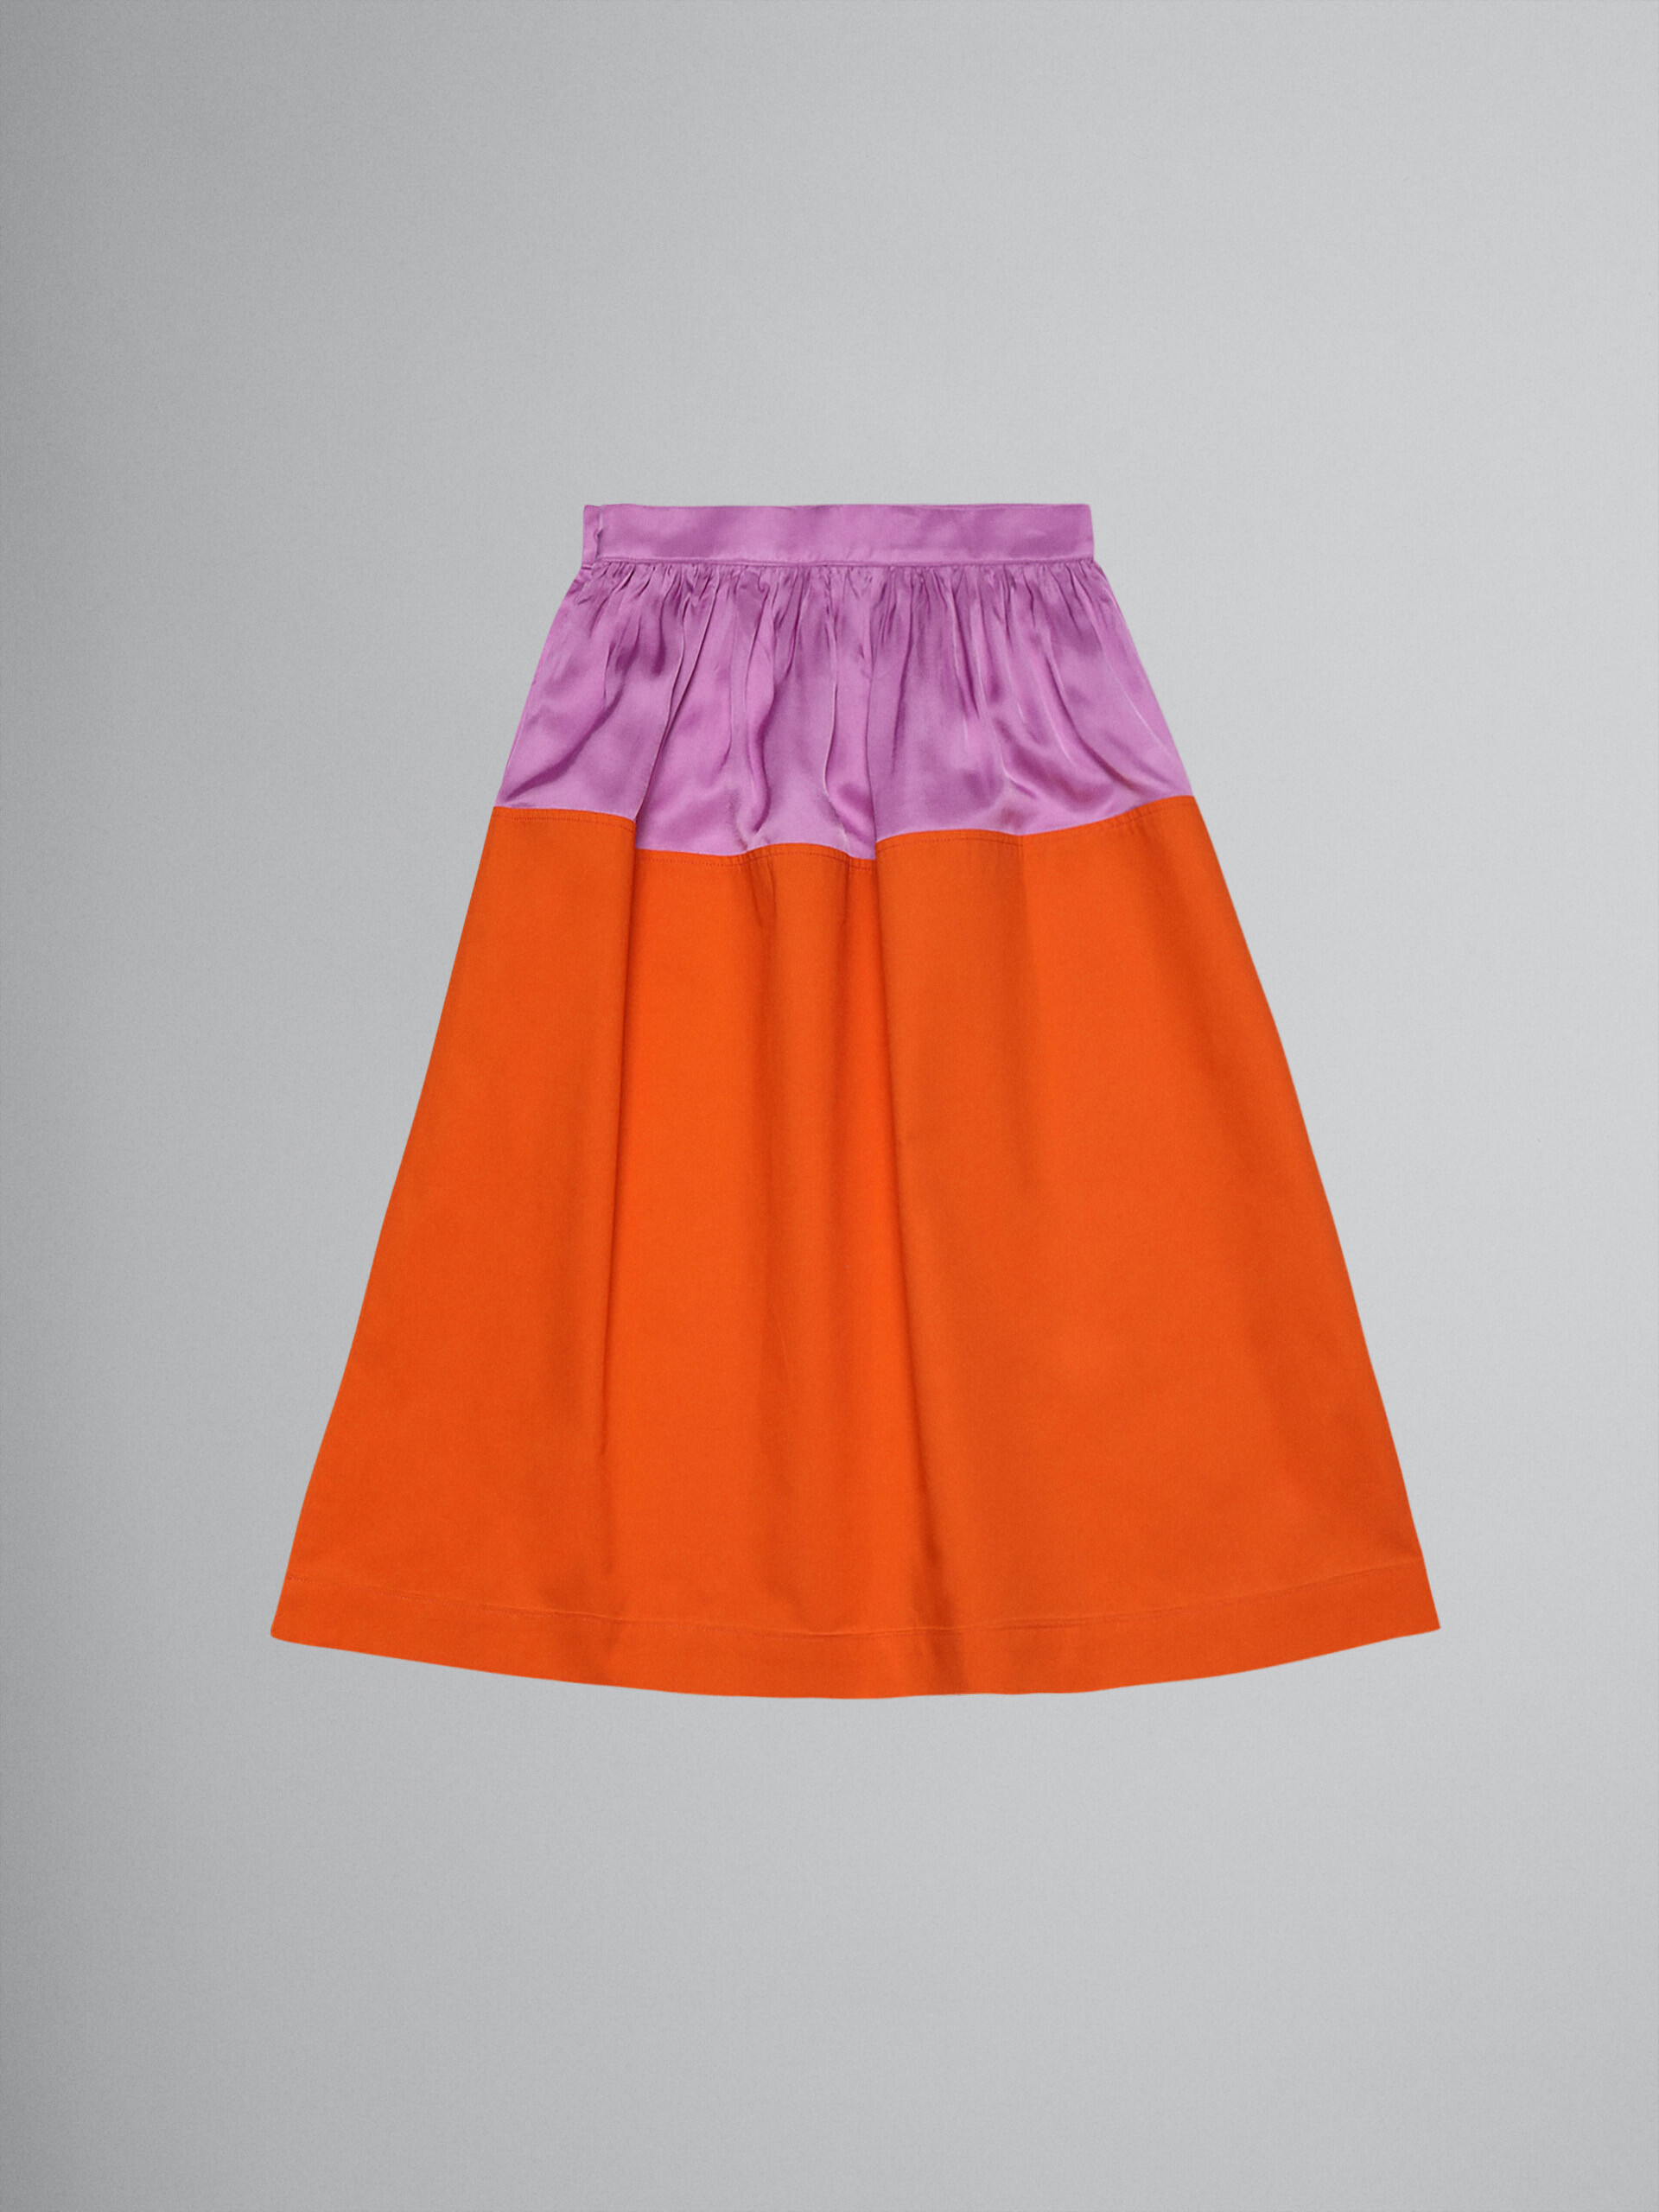 Cotton gabardine and satin skirt - Skirts - Image 2